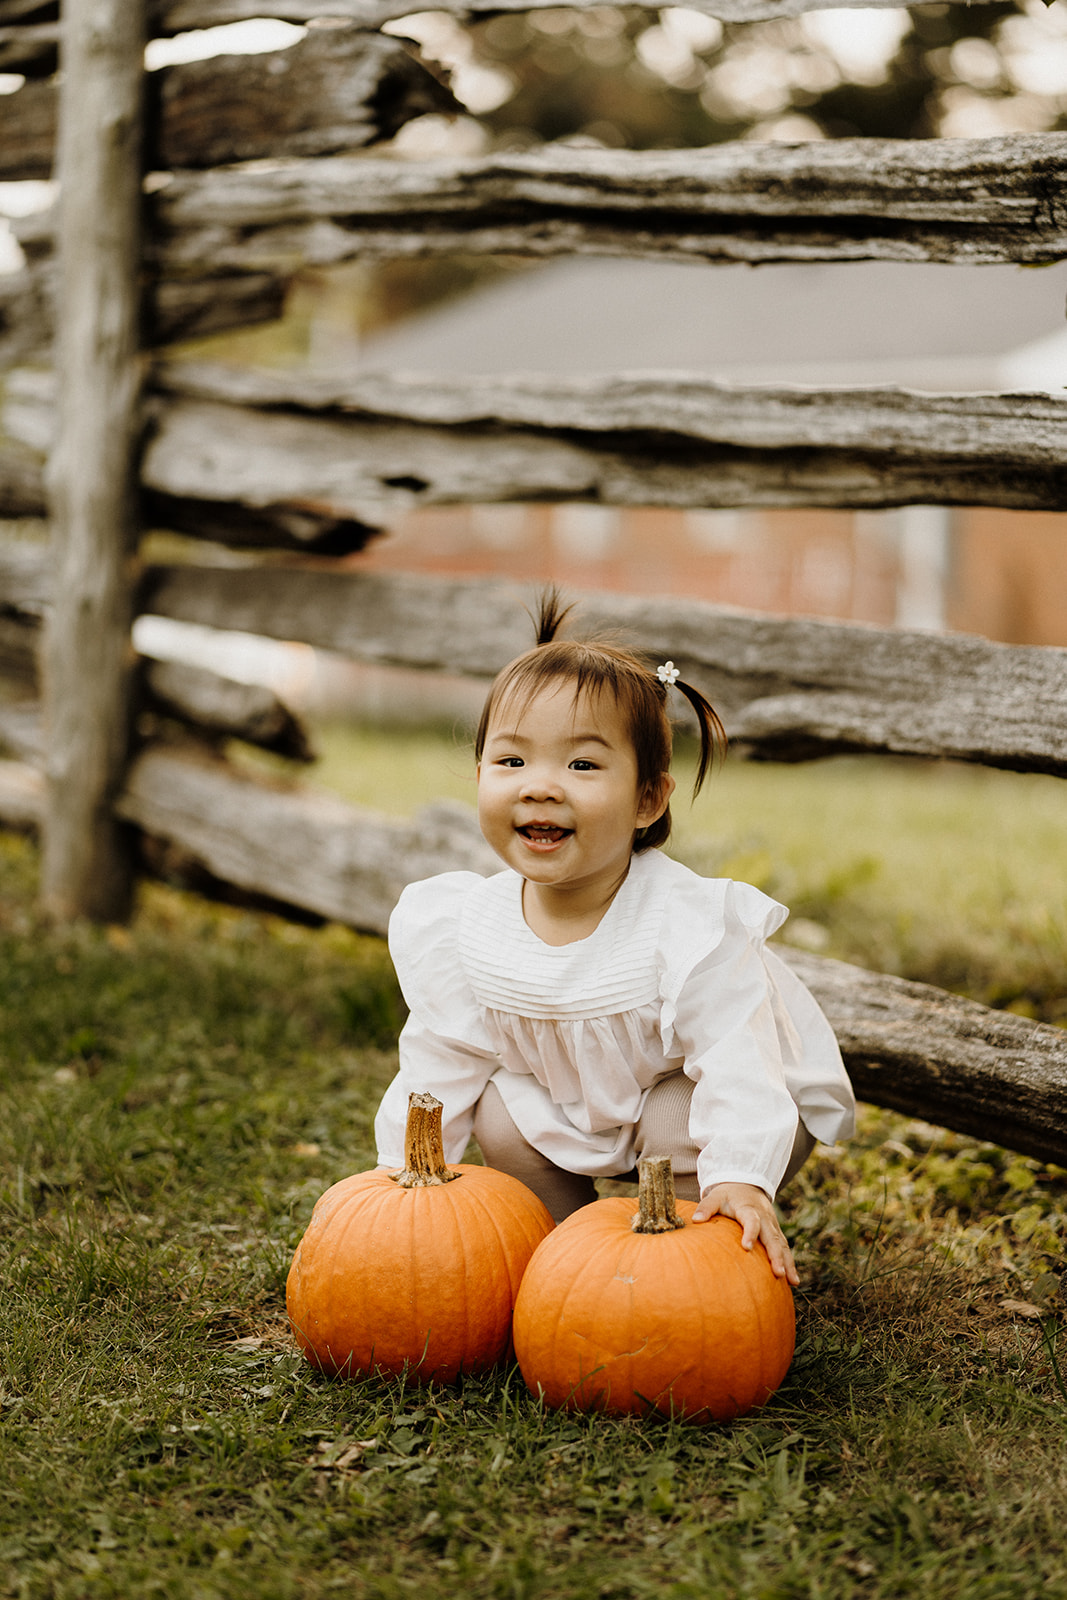 Child touching two pumpkins.